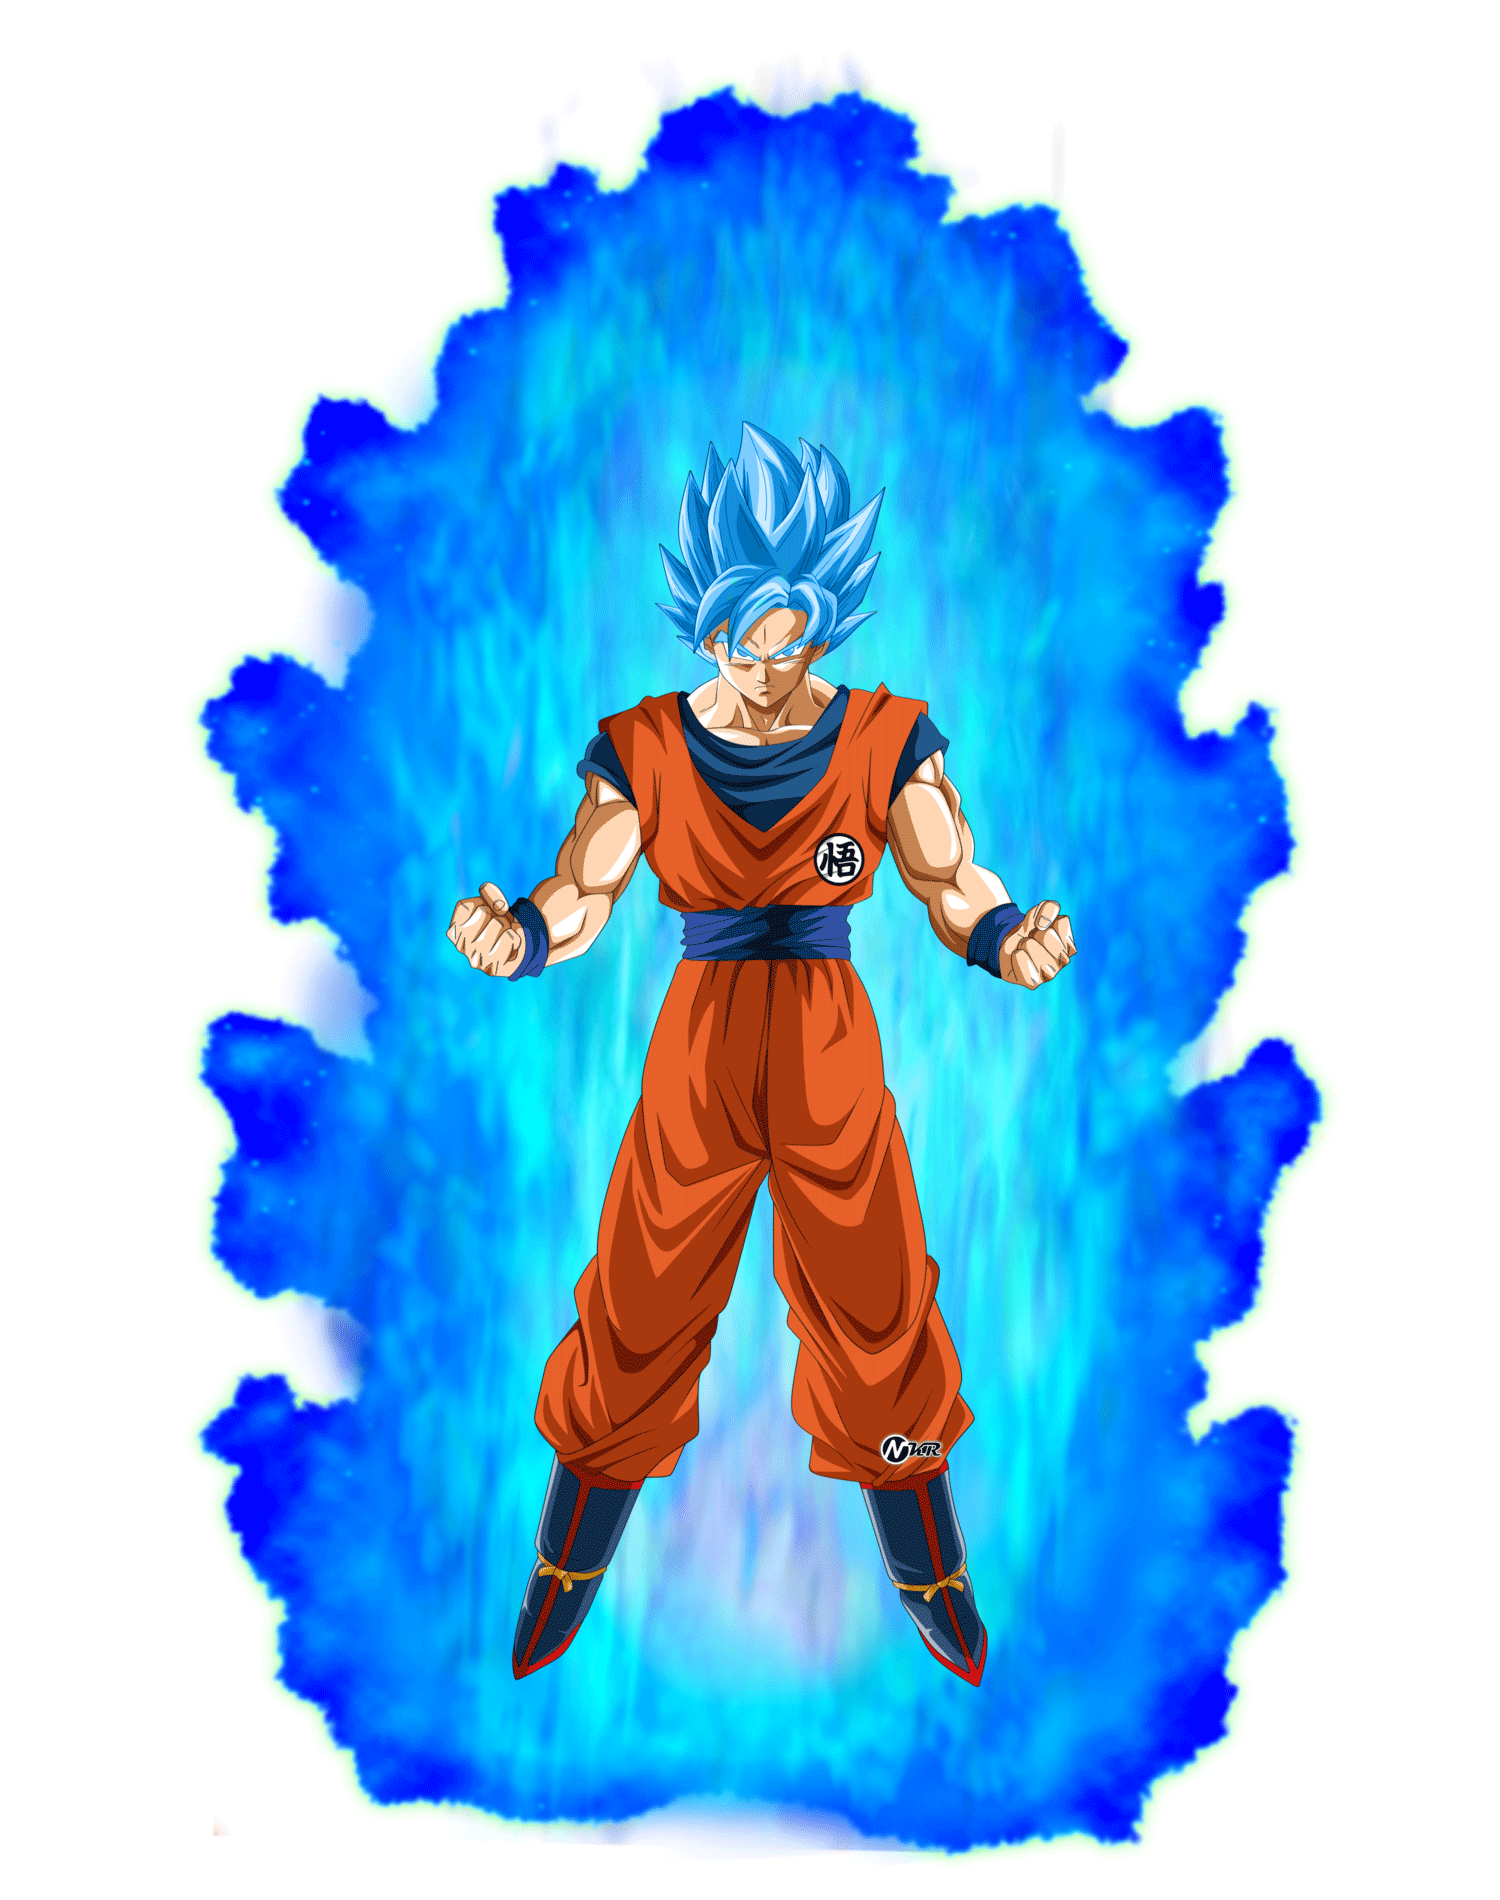 Goku ssj blue evolution by Erick101 on DeviantArt